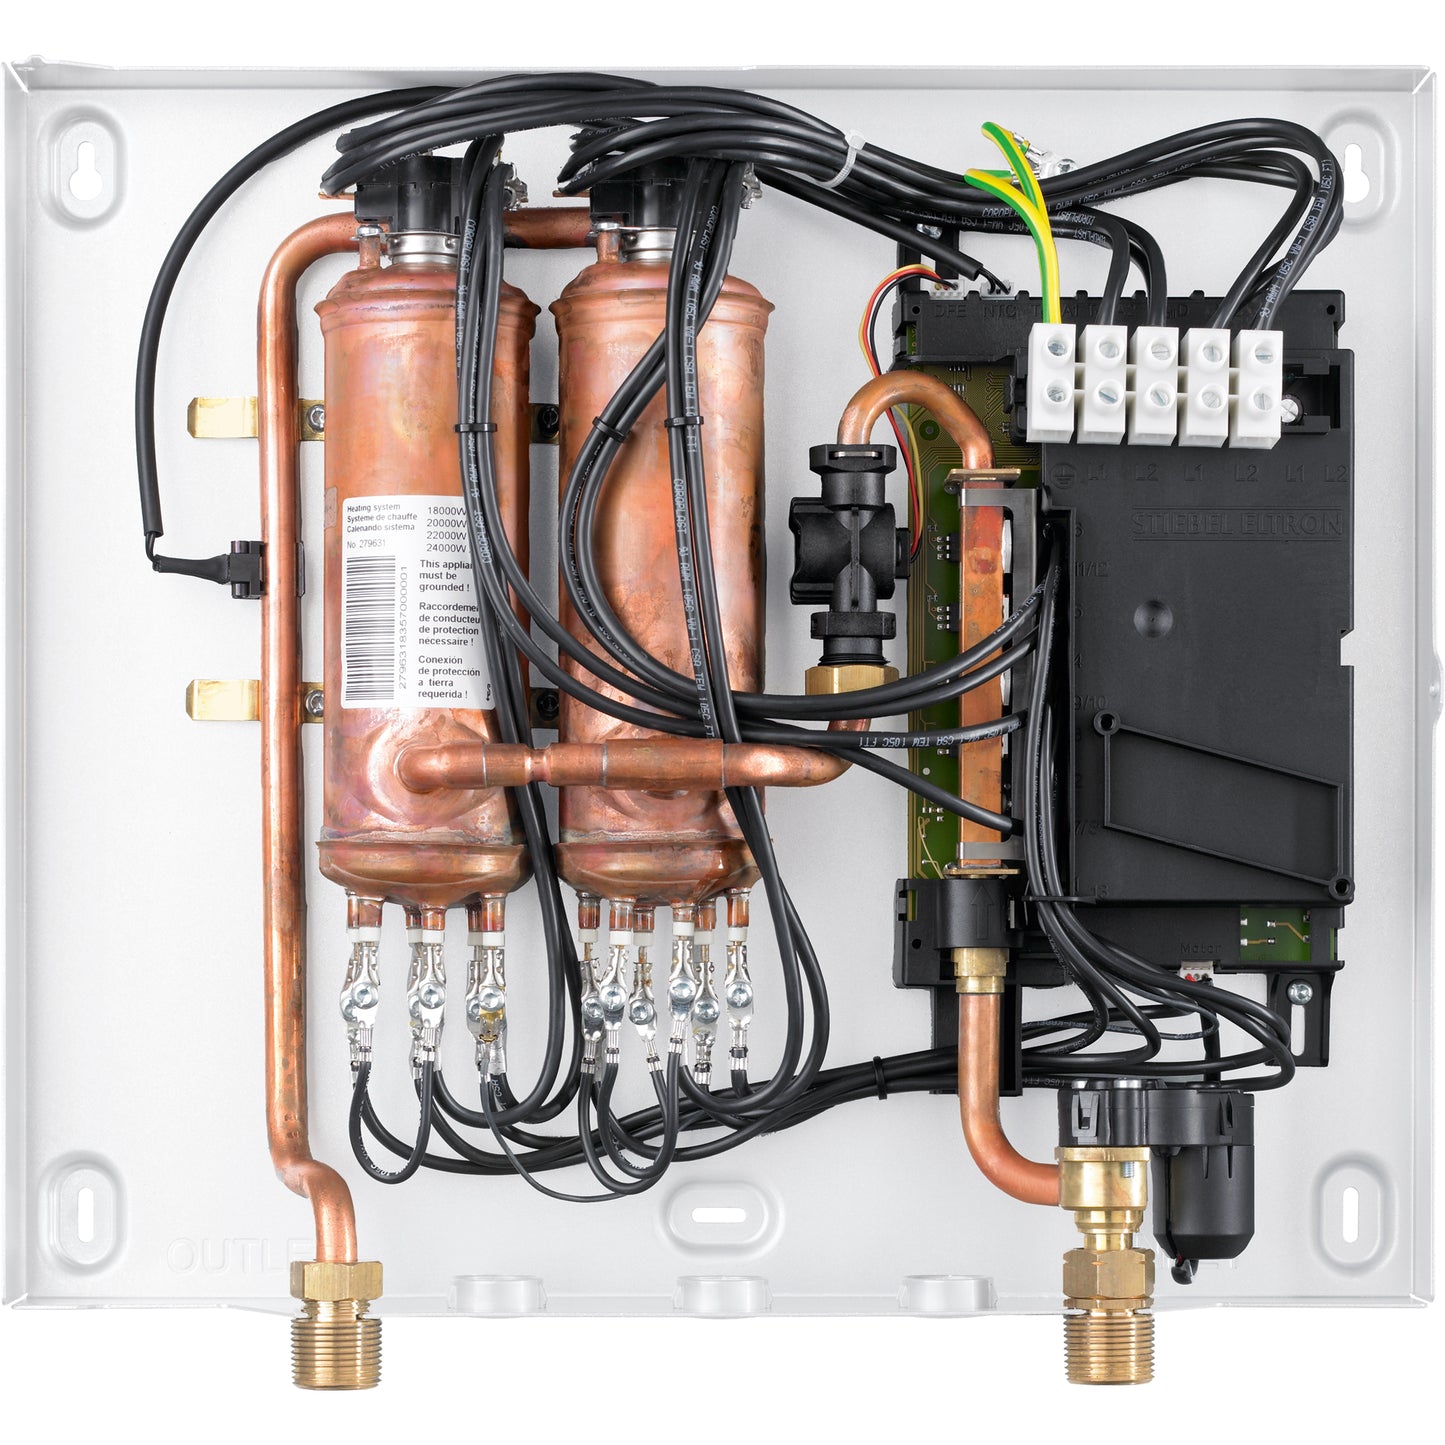 Stiebel Eltron Tempra 15 Plus / 239220  Electric 240/208V, 14.4 KW Copper Tankless Water Heater w. Advanced Flow Control